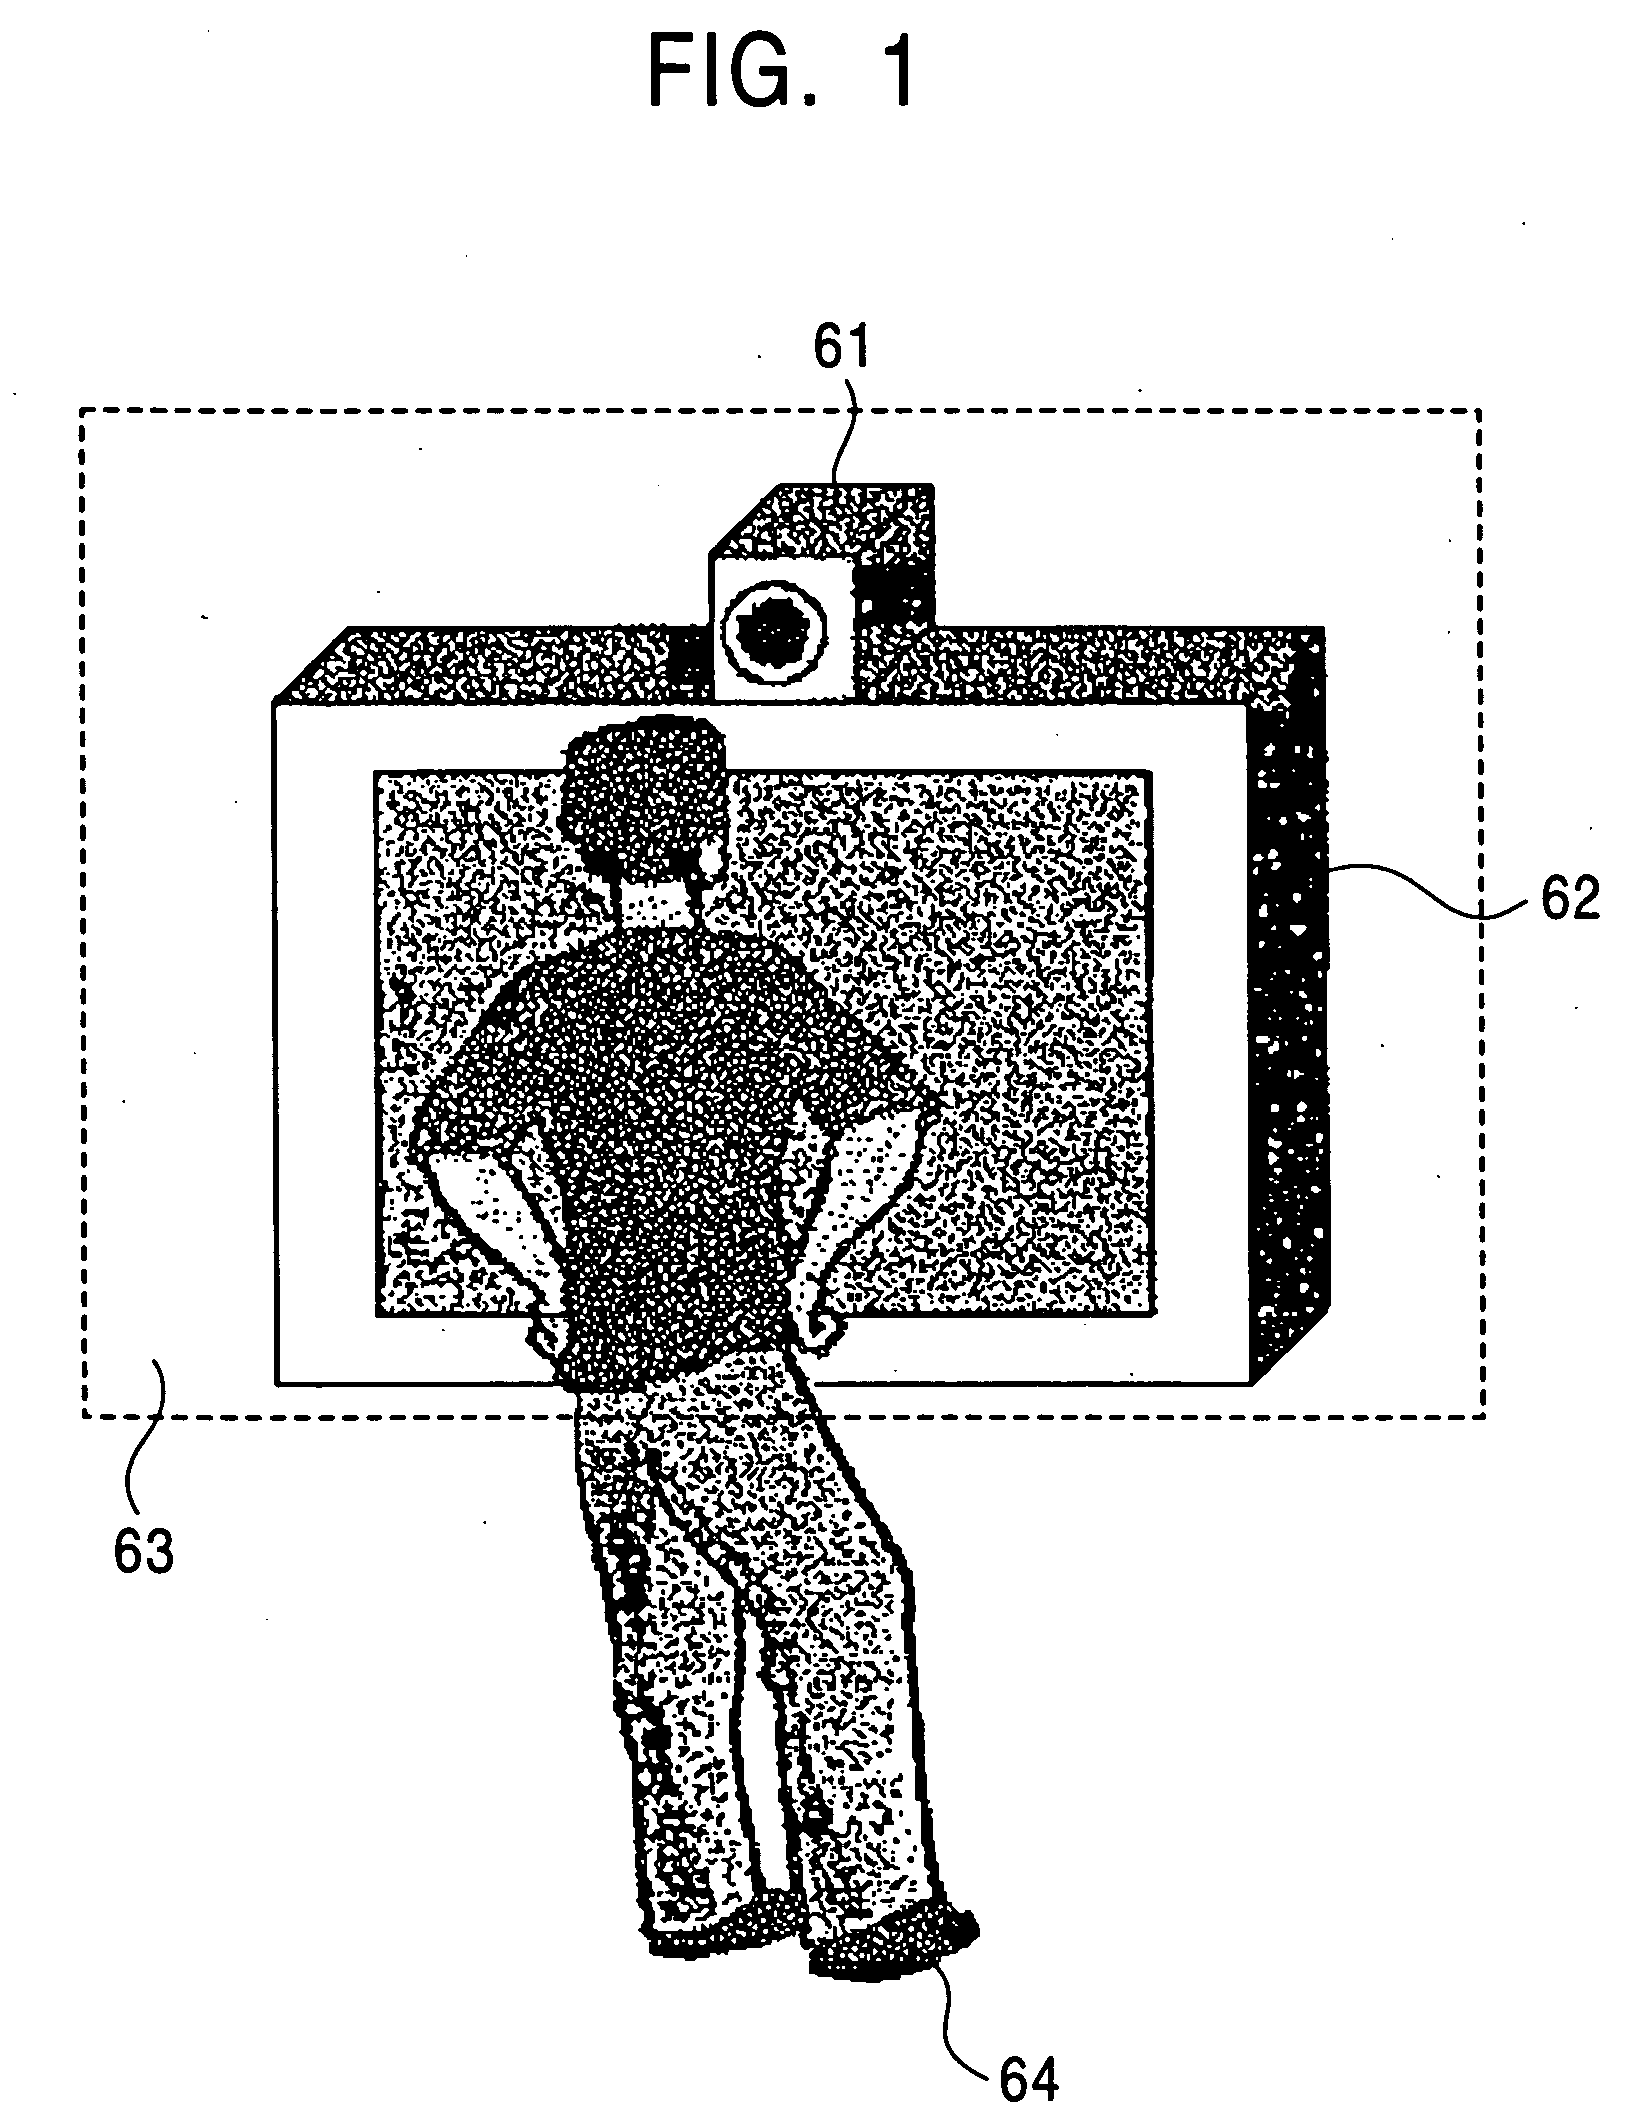 Interface apparatus